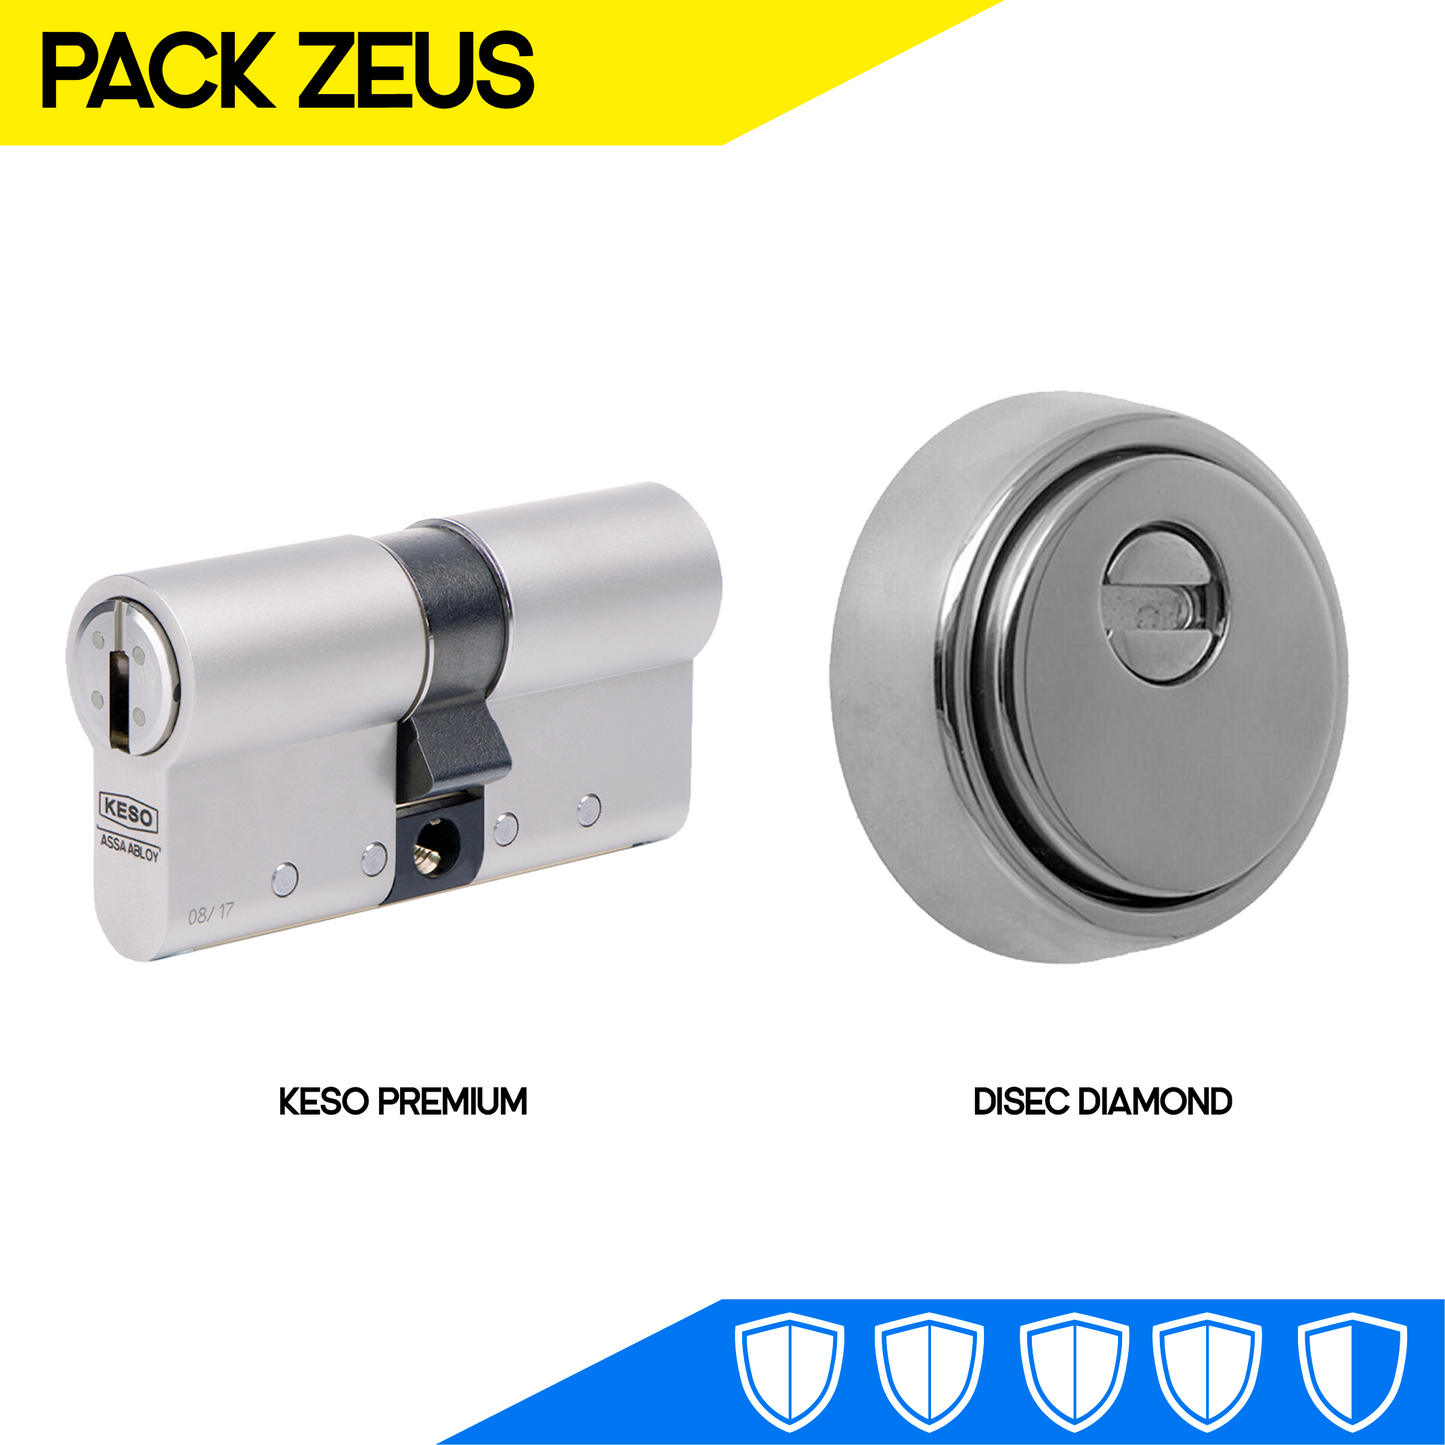 Pack de seguridad Zeus (Keso Premium + Disec Diamond)